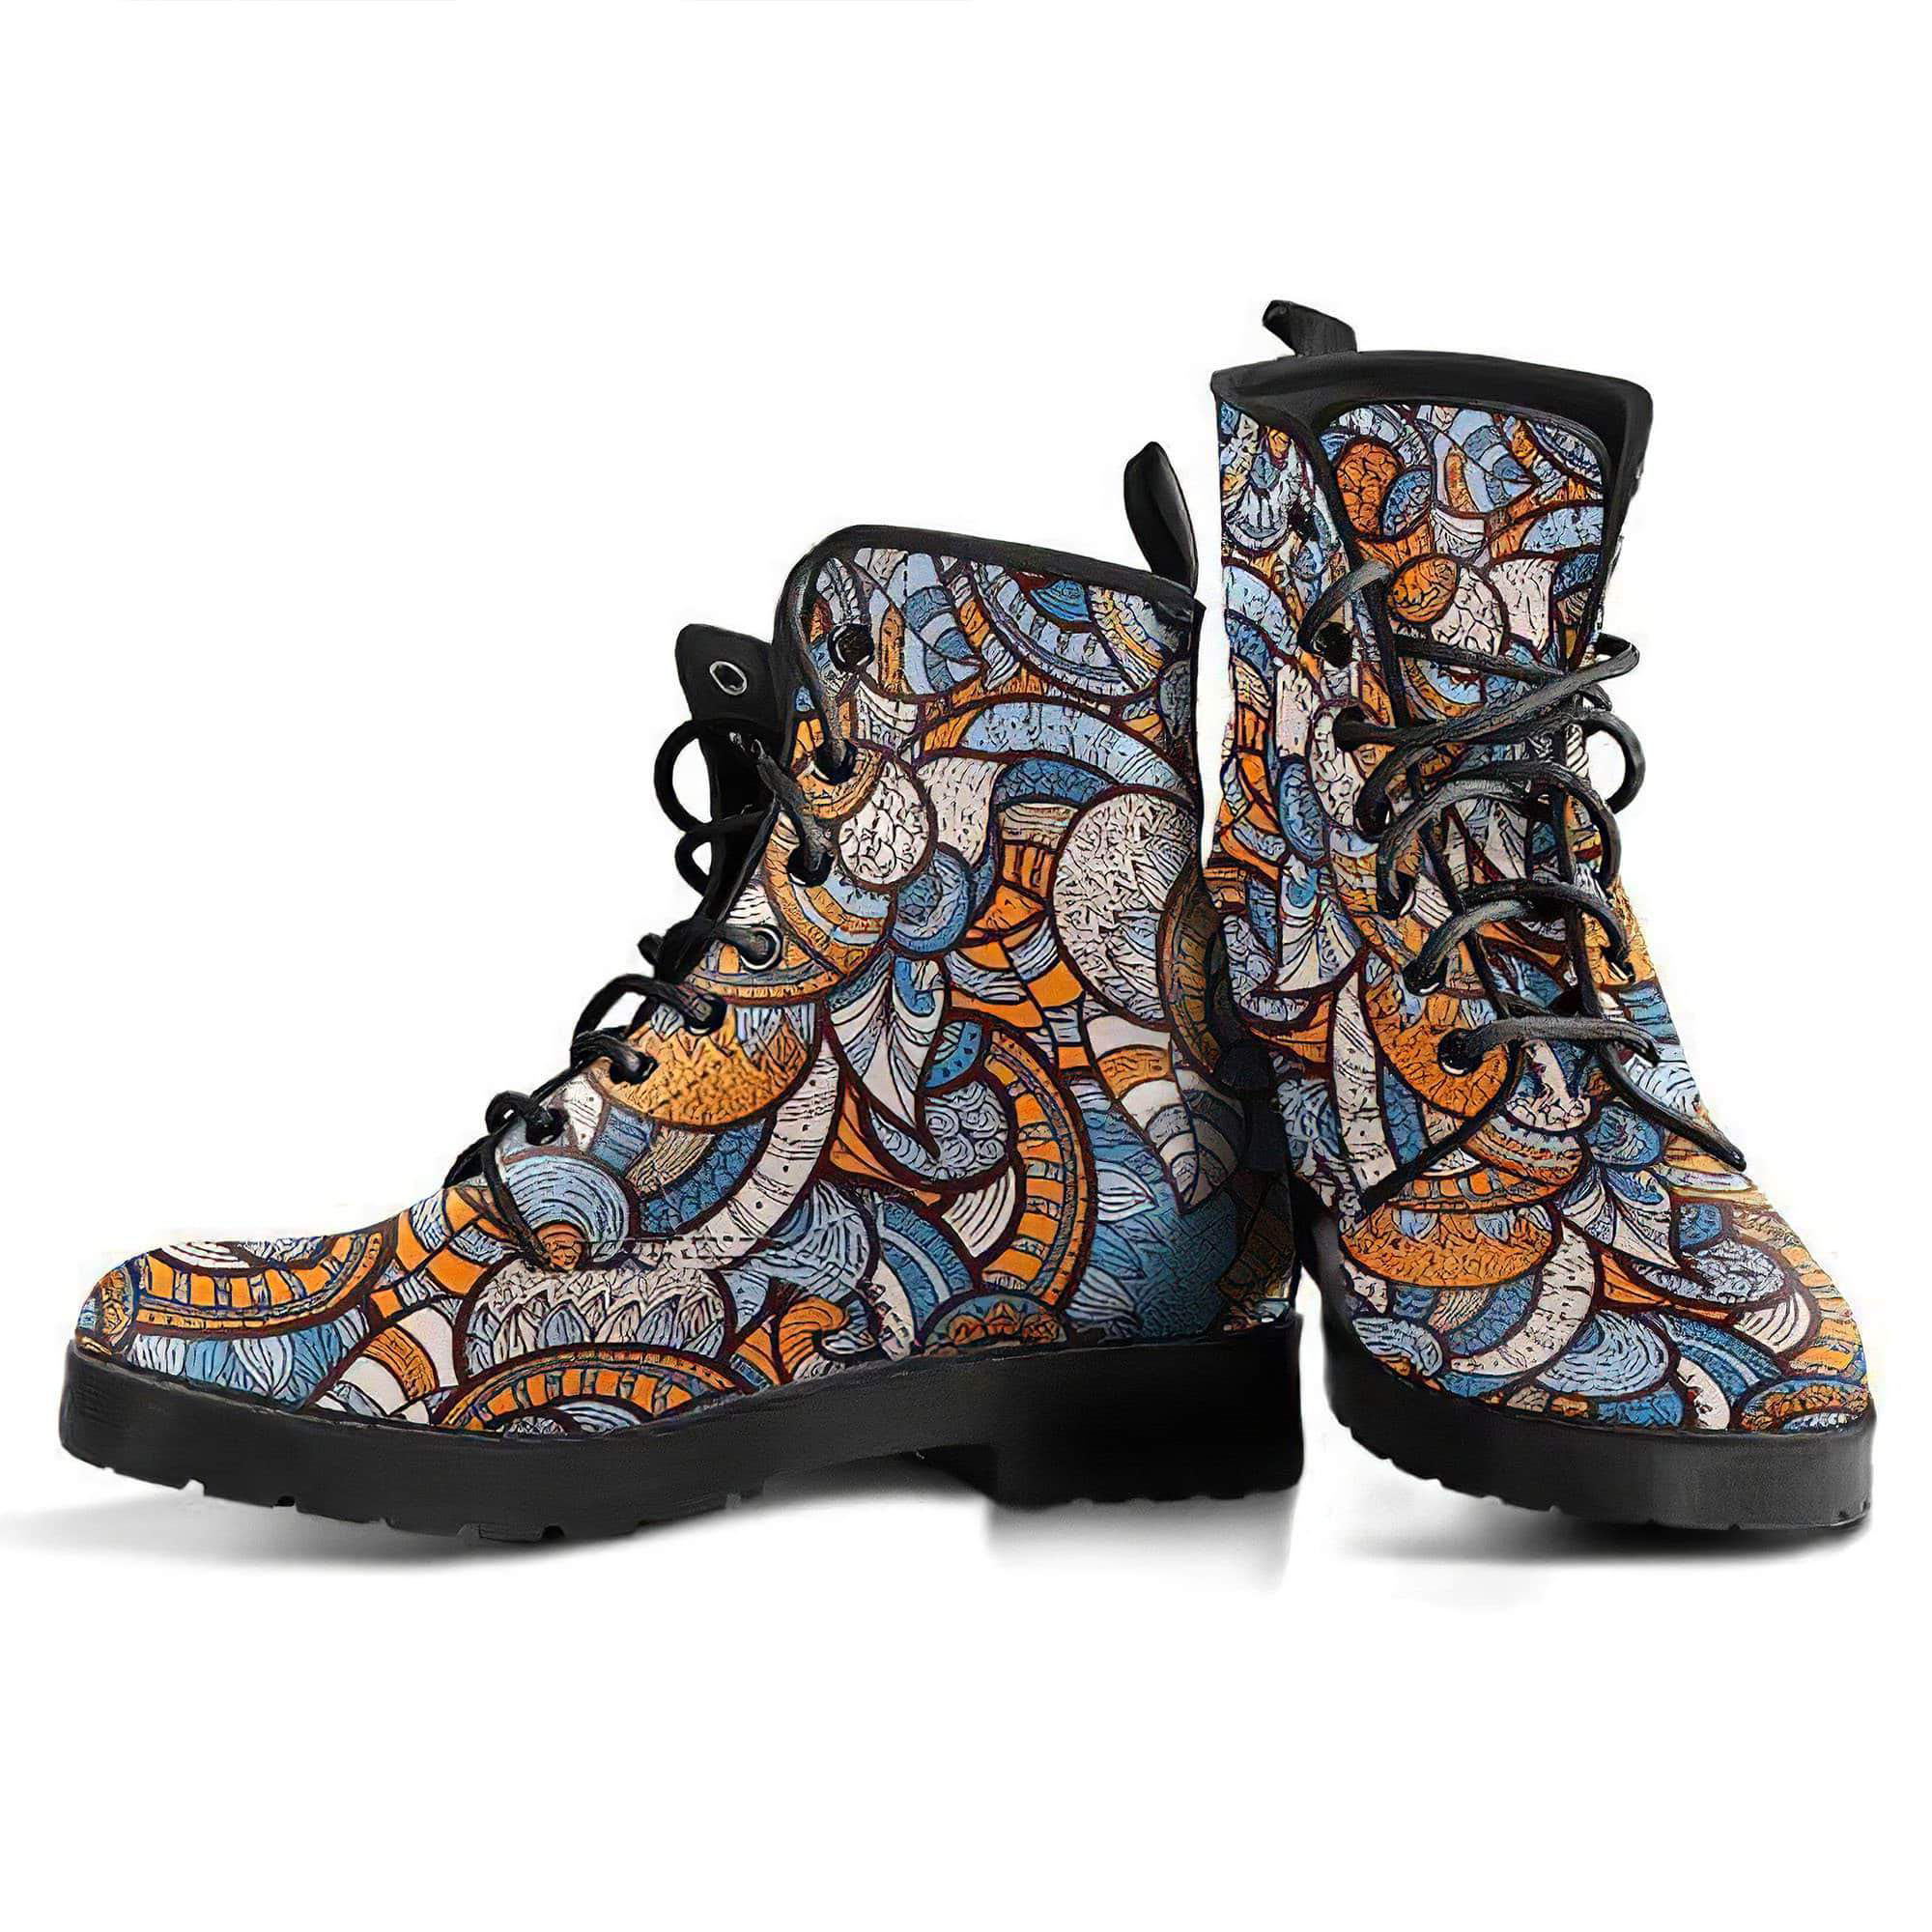 zen-4-handcrafted-boots-women-s-leather-boots-12051990675517.jpg